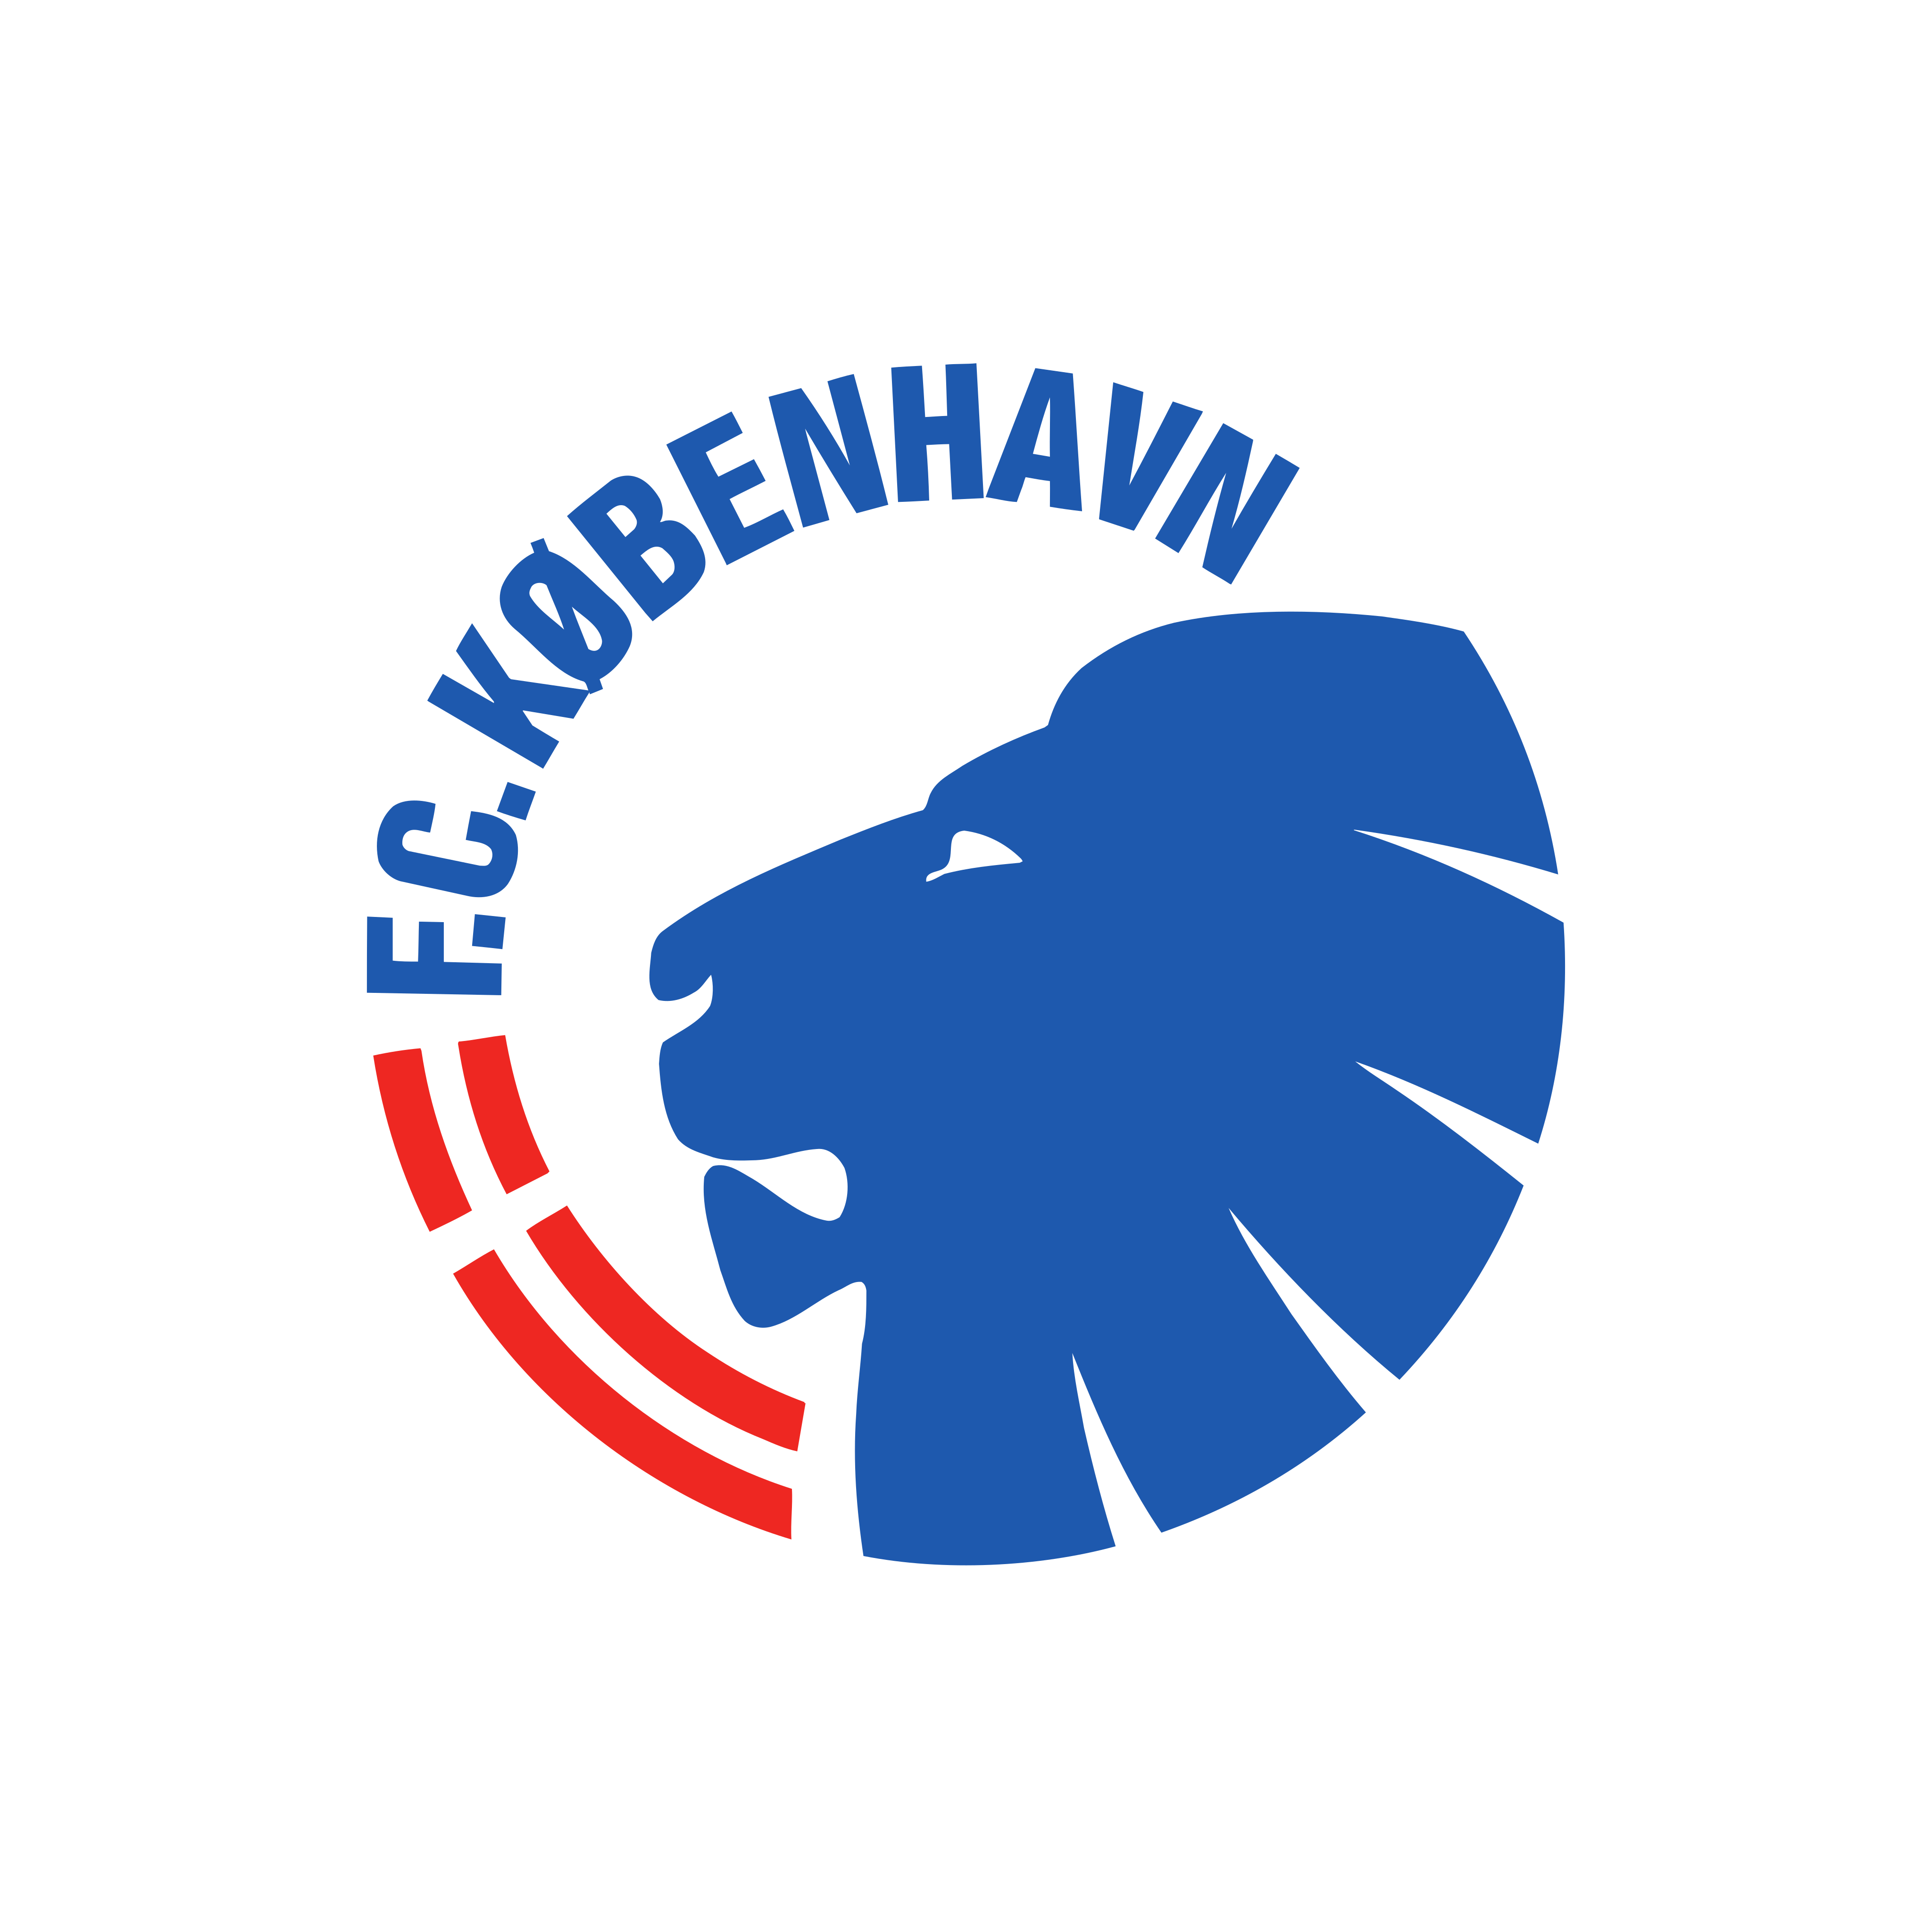 fc copenhagen logo 0 - F.C. Copenhagen - F.C. København Logo